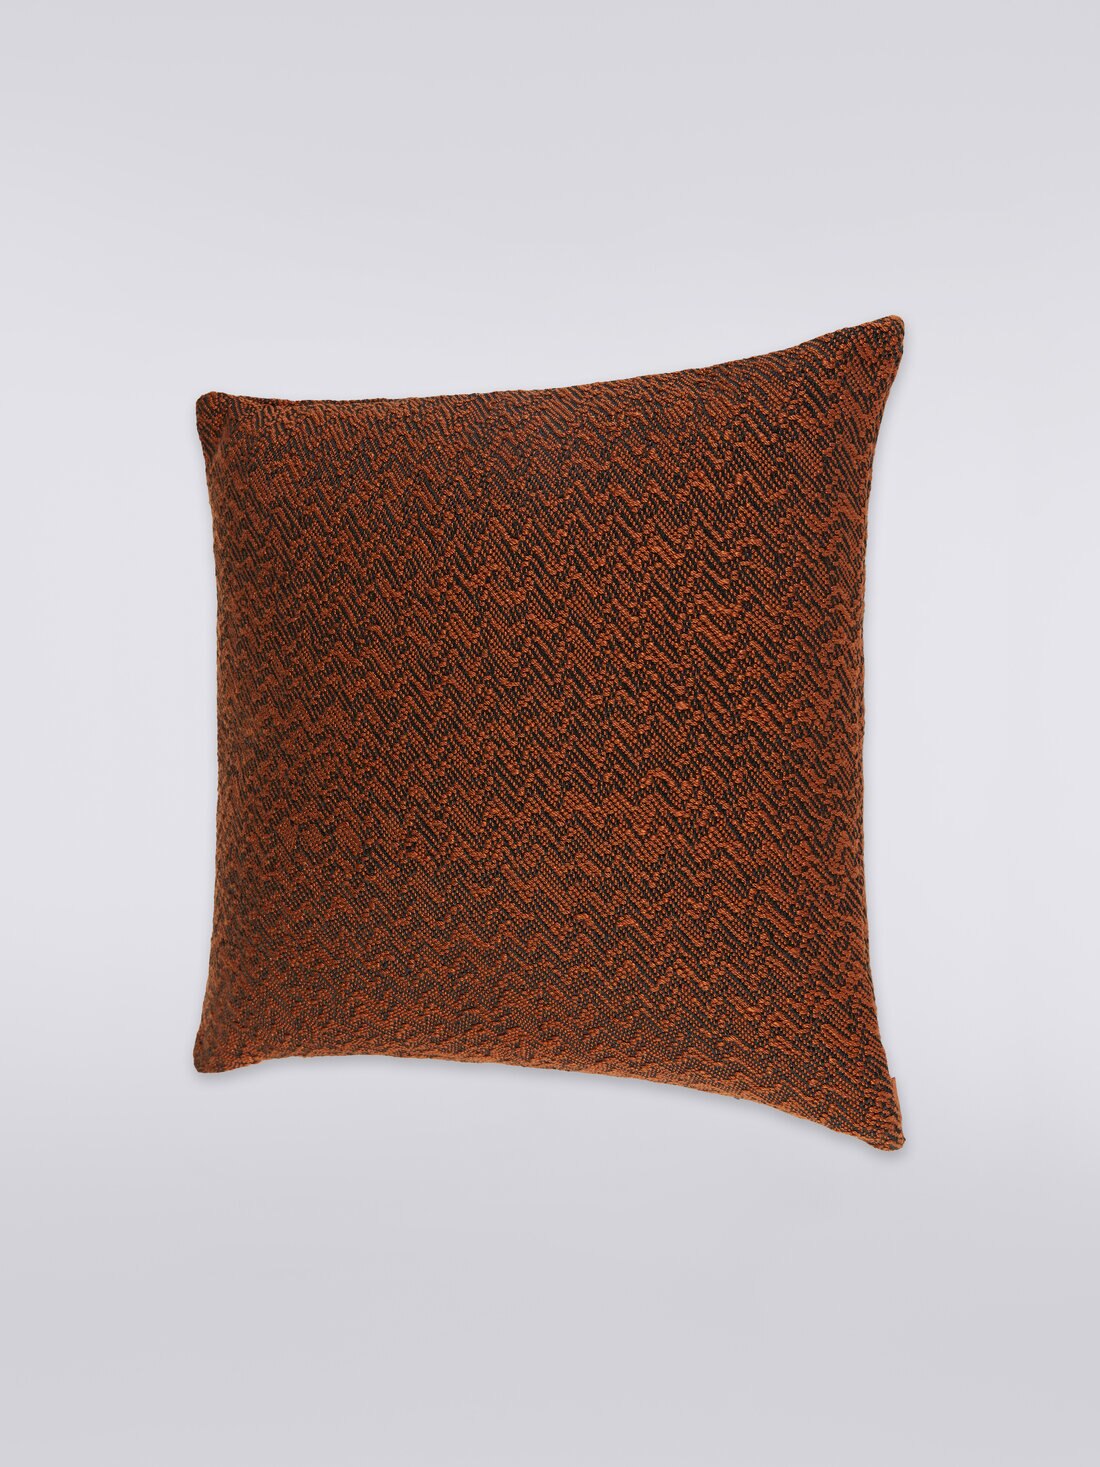 Brunette cushion 40x40 cm, Multicoloured  - 8051275581543 - 1